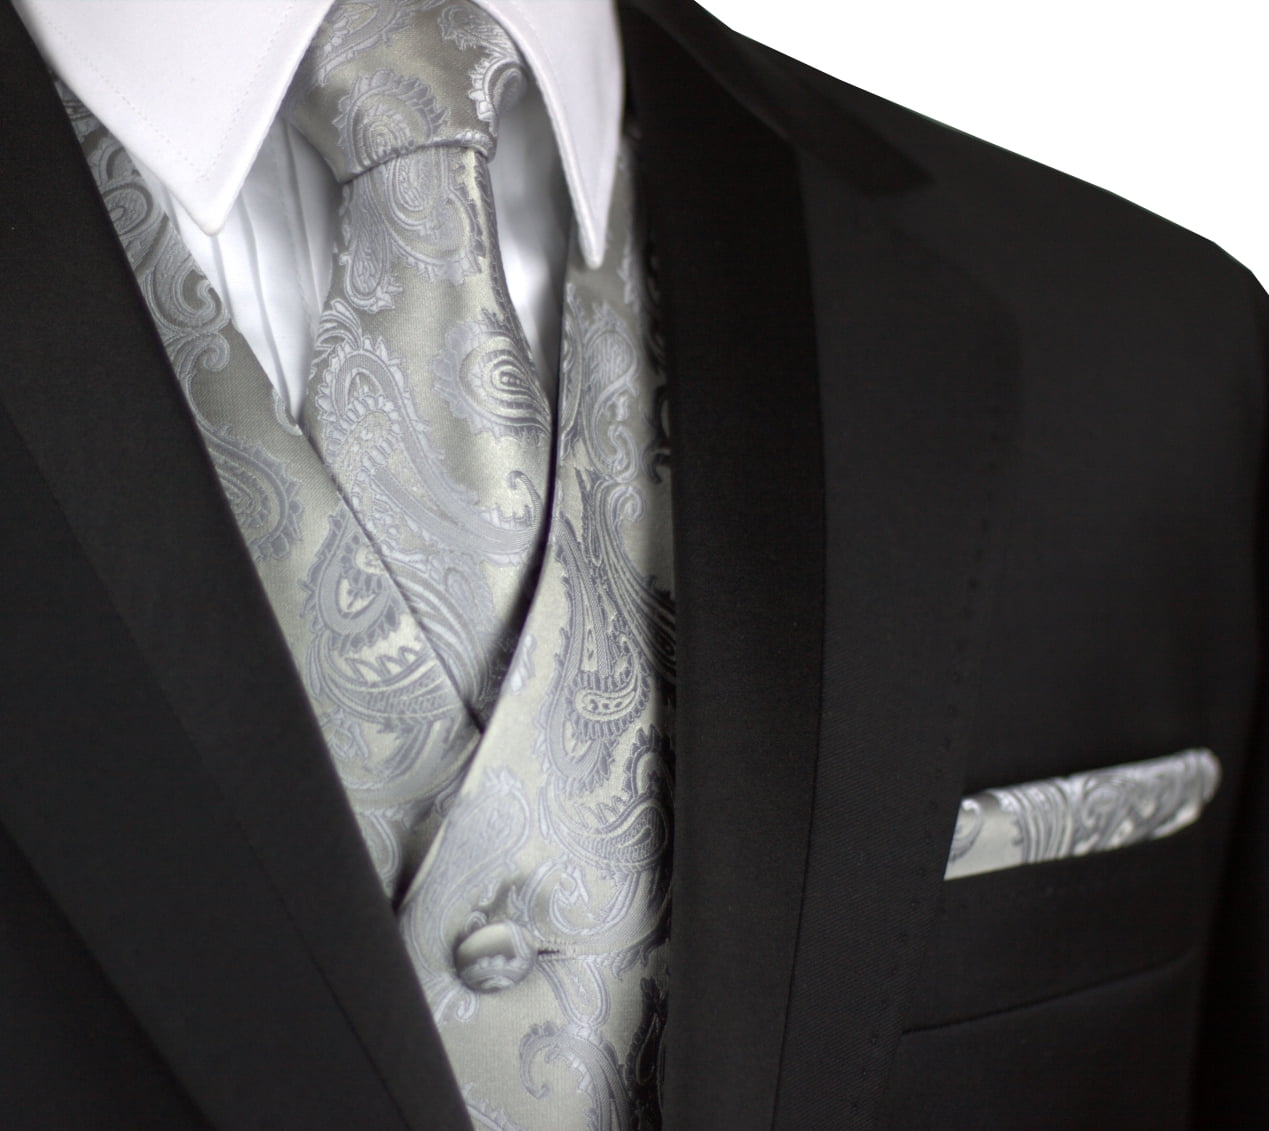 DQT Satin Plain Solid Silver Formal Tuxedo Mens Wedding Waistcoat S-5XL 